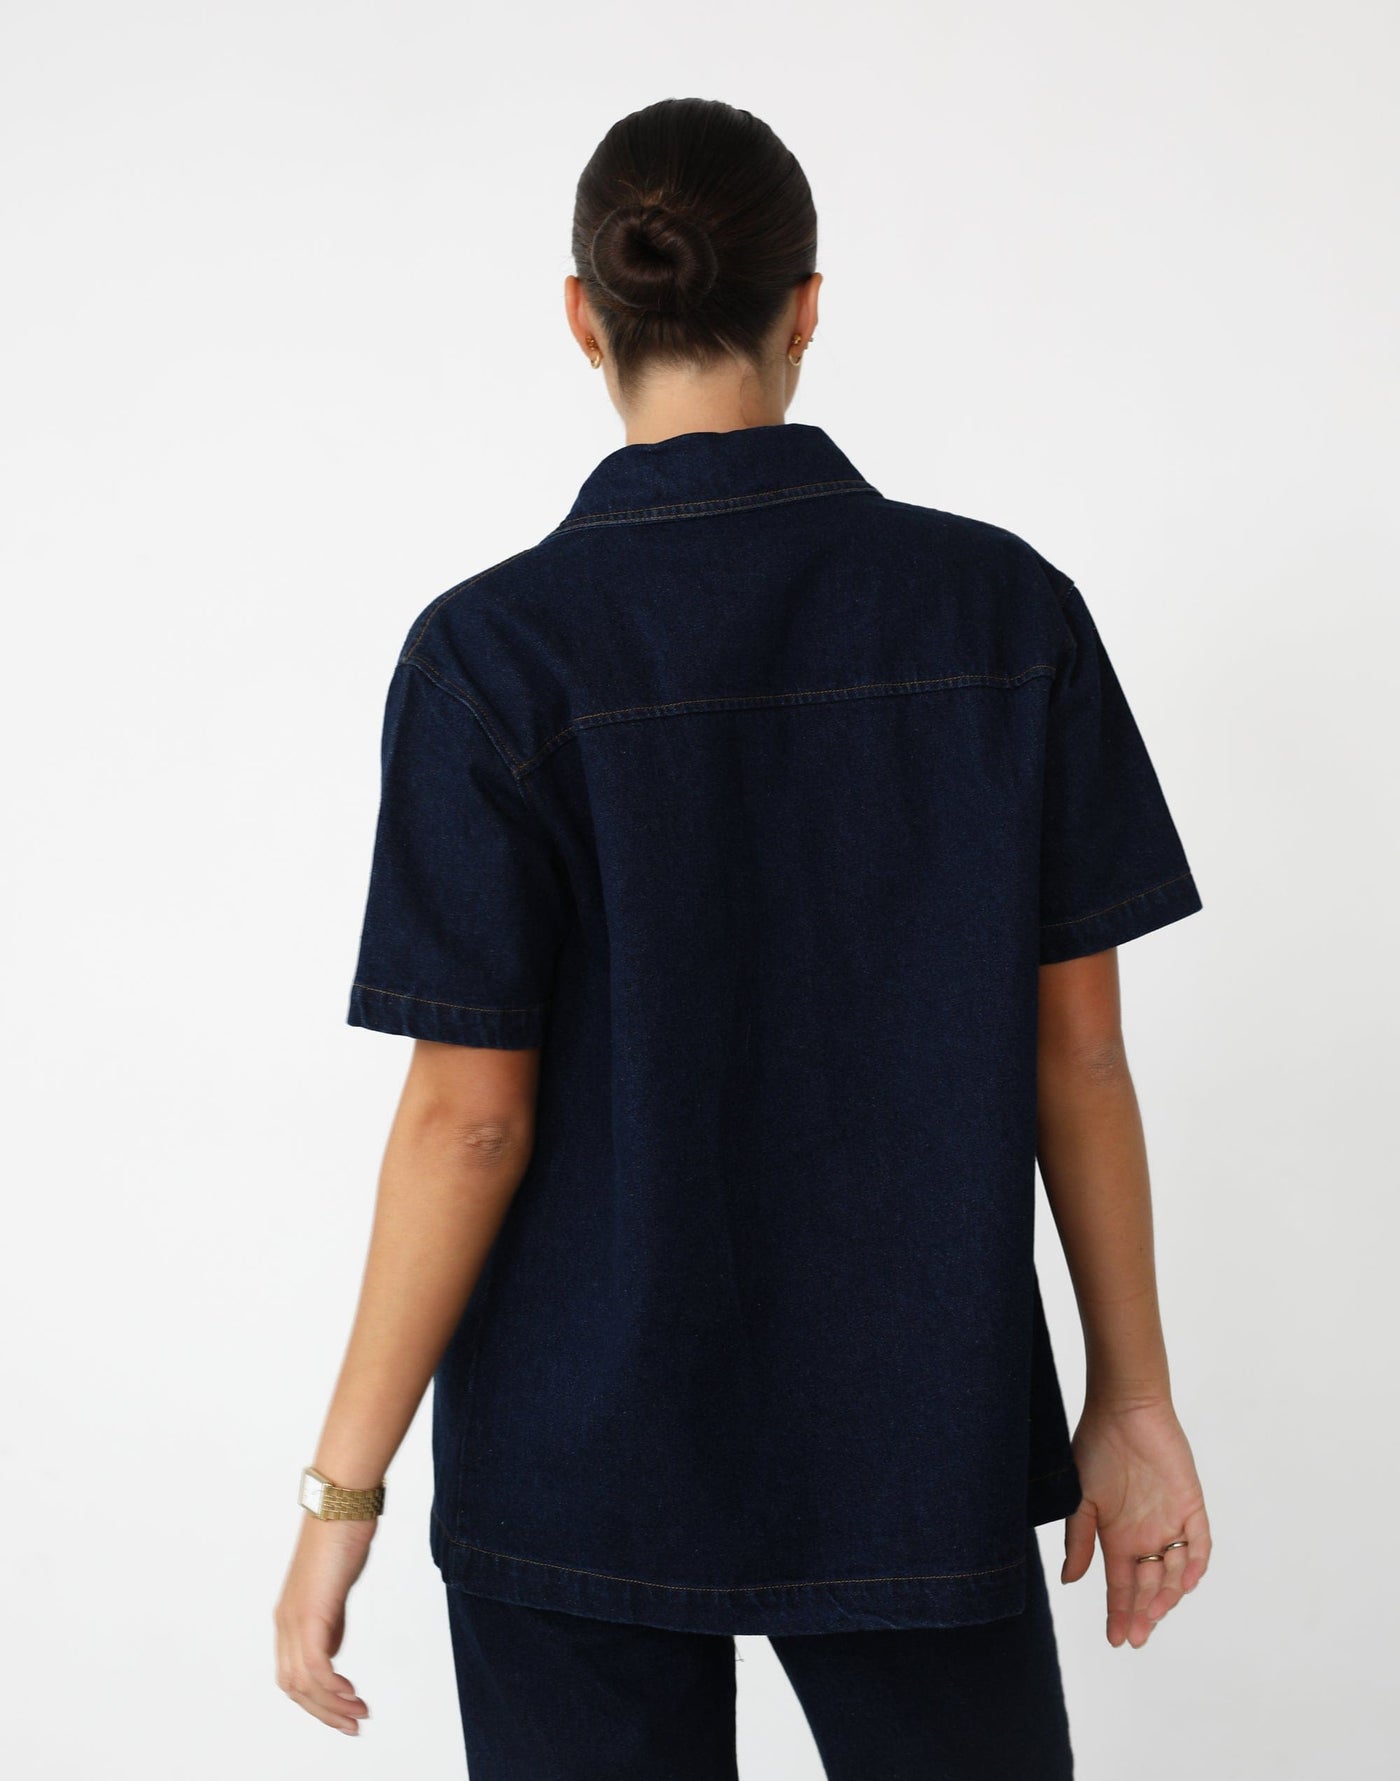 Lili Denim Shirt (Dark Denim) - Button Up Shirt with Pocket - Women's Top - Charcoal Clothing